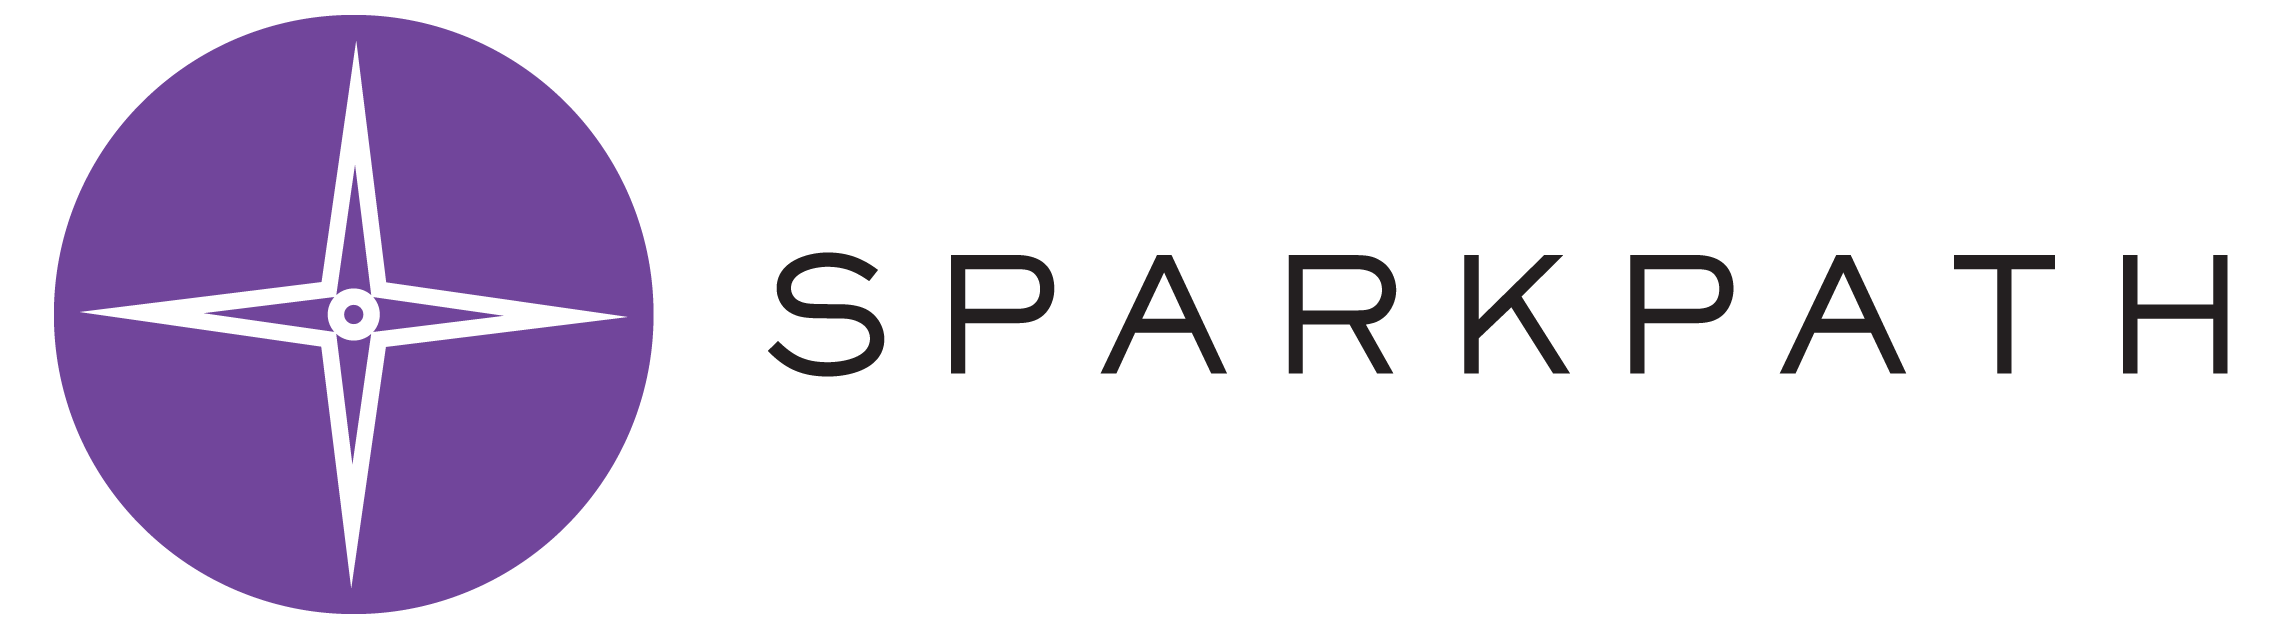 SparkPath